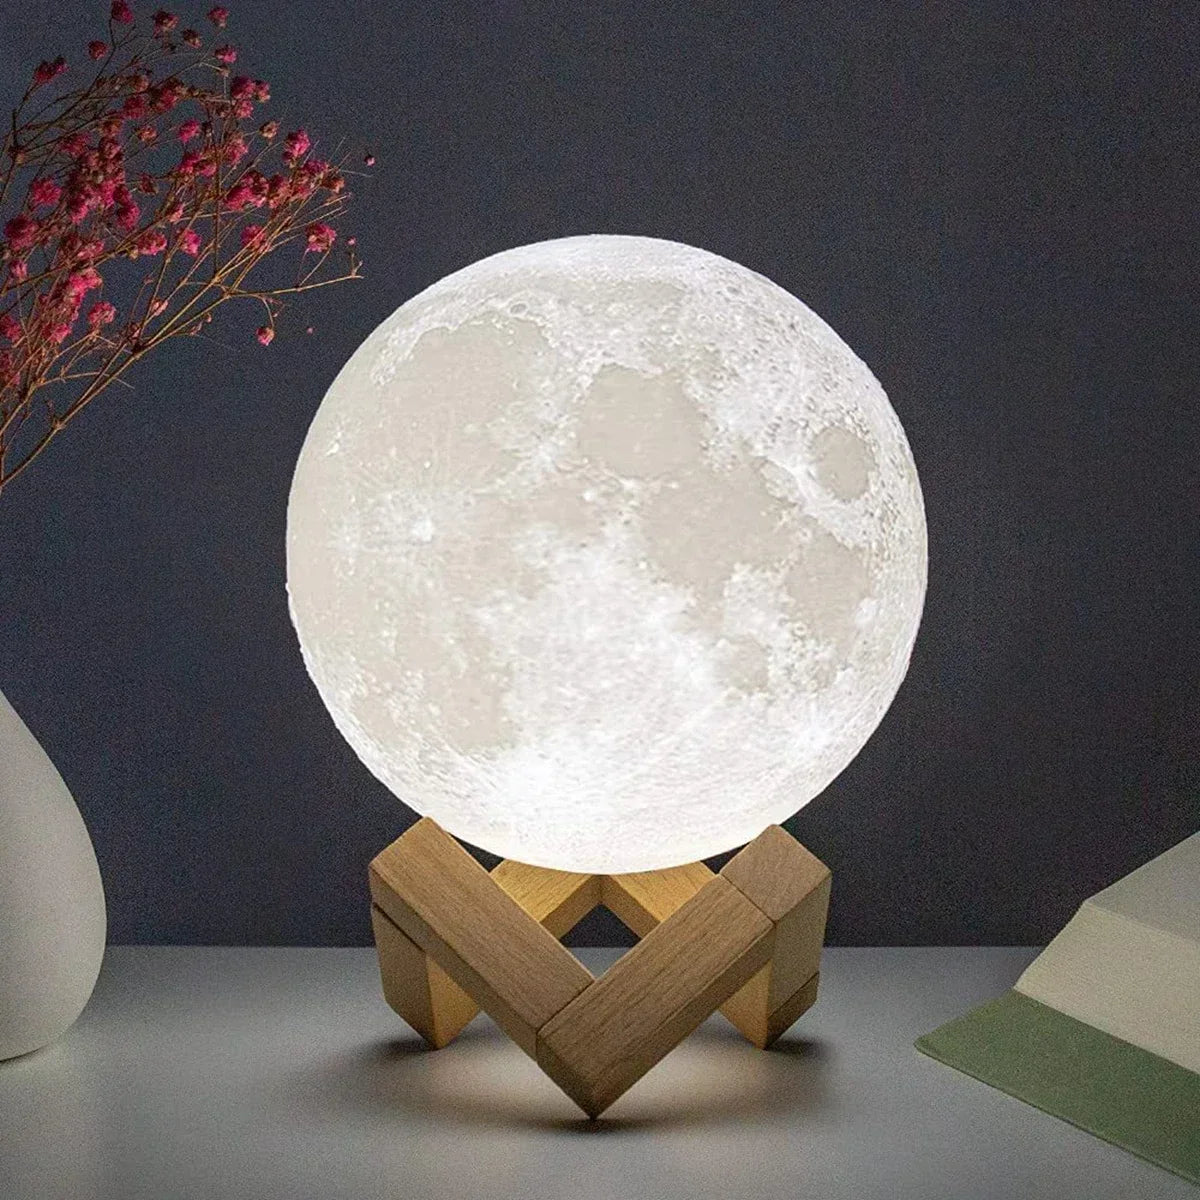 8cm Moon Lamp LED Night Light